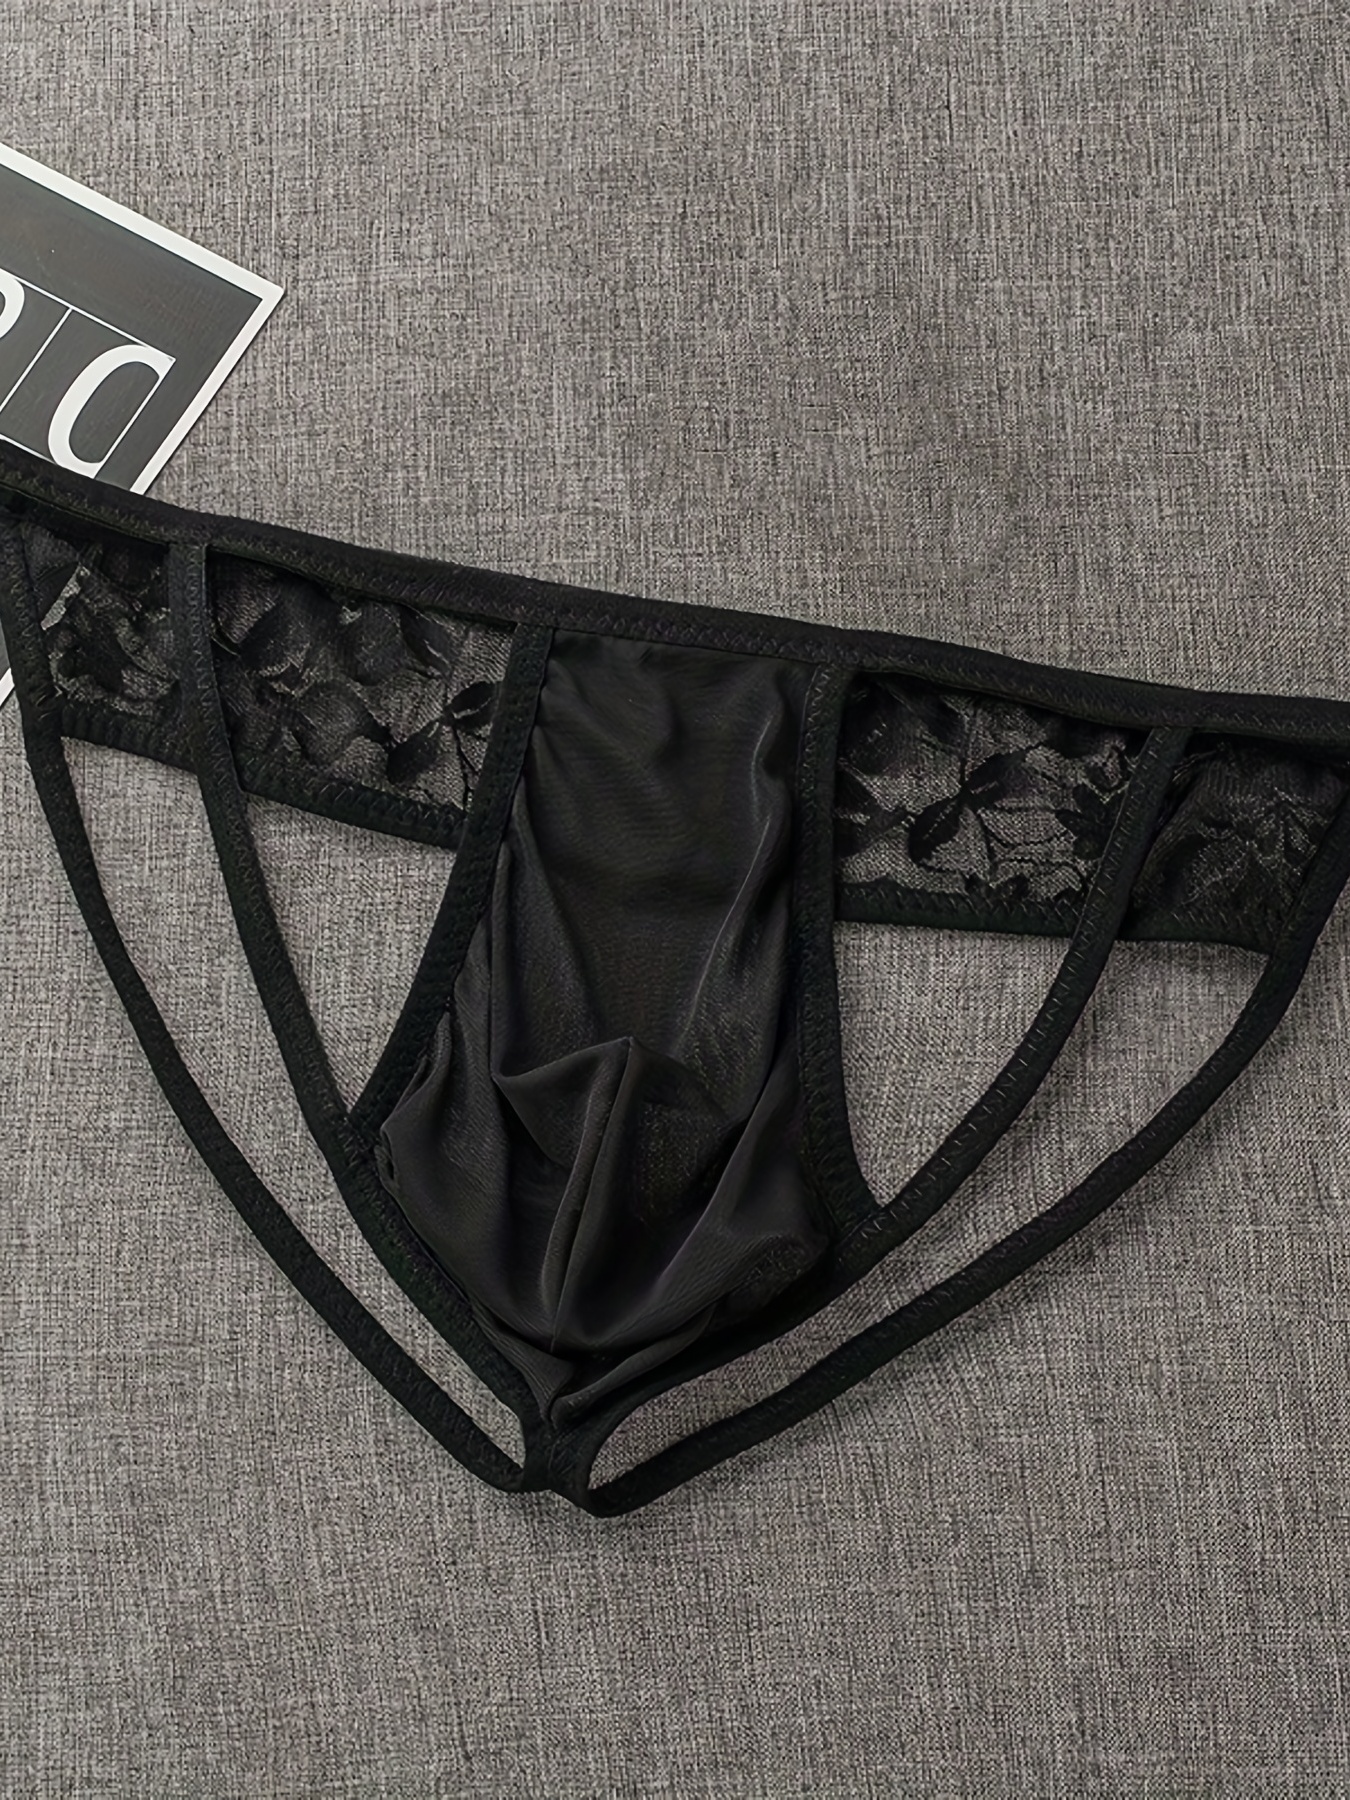 Men Sexy Briefs G string Tanga Underwear Low Rise Panties Underpants  Translucent